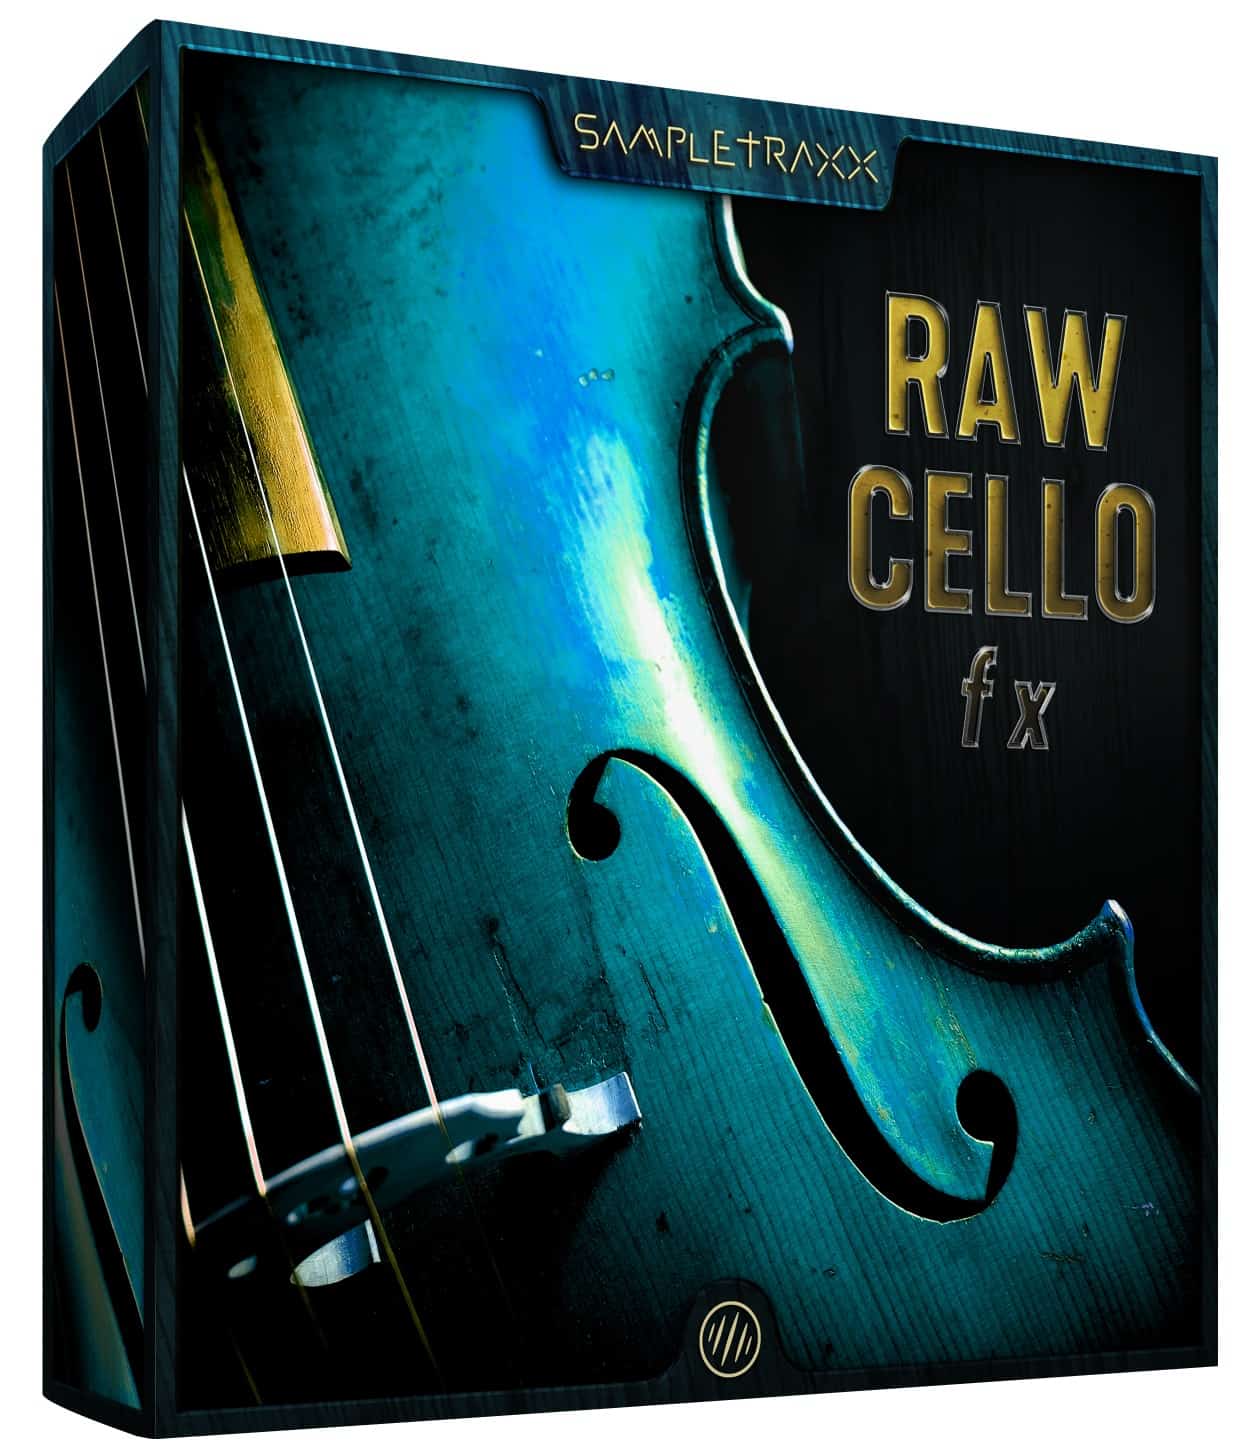 SampleTraxx Releases RAW CELLO FX – Organic Cello Sound Effects